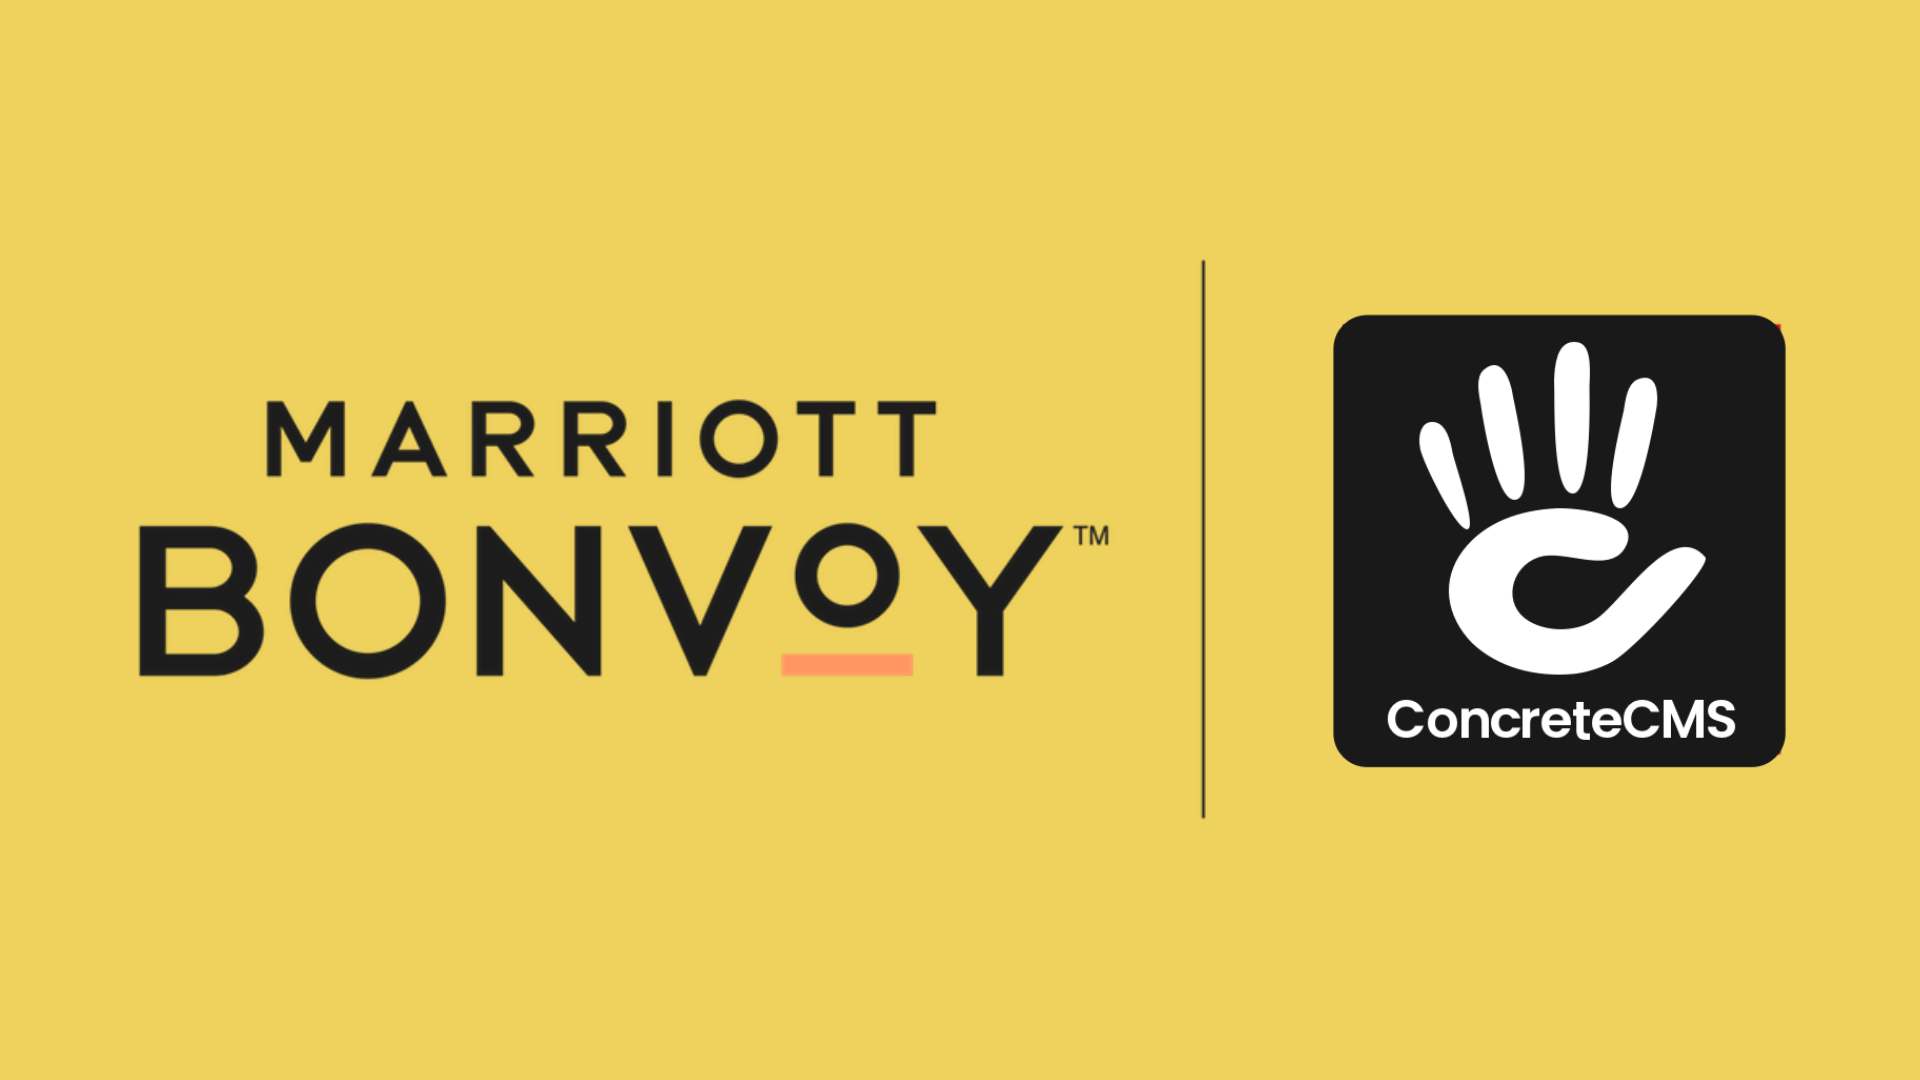 Marriott bonvoy - promo analysis